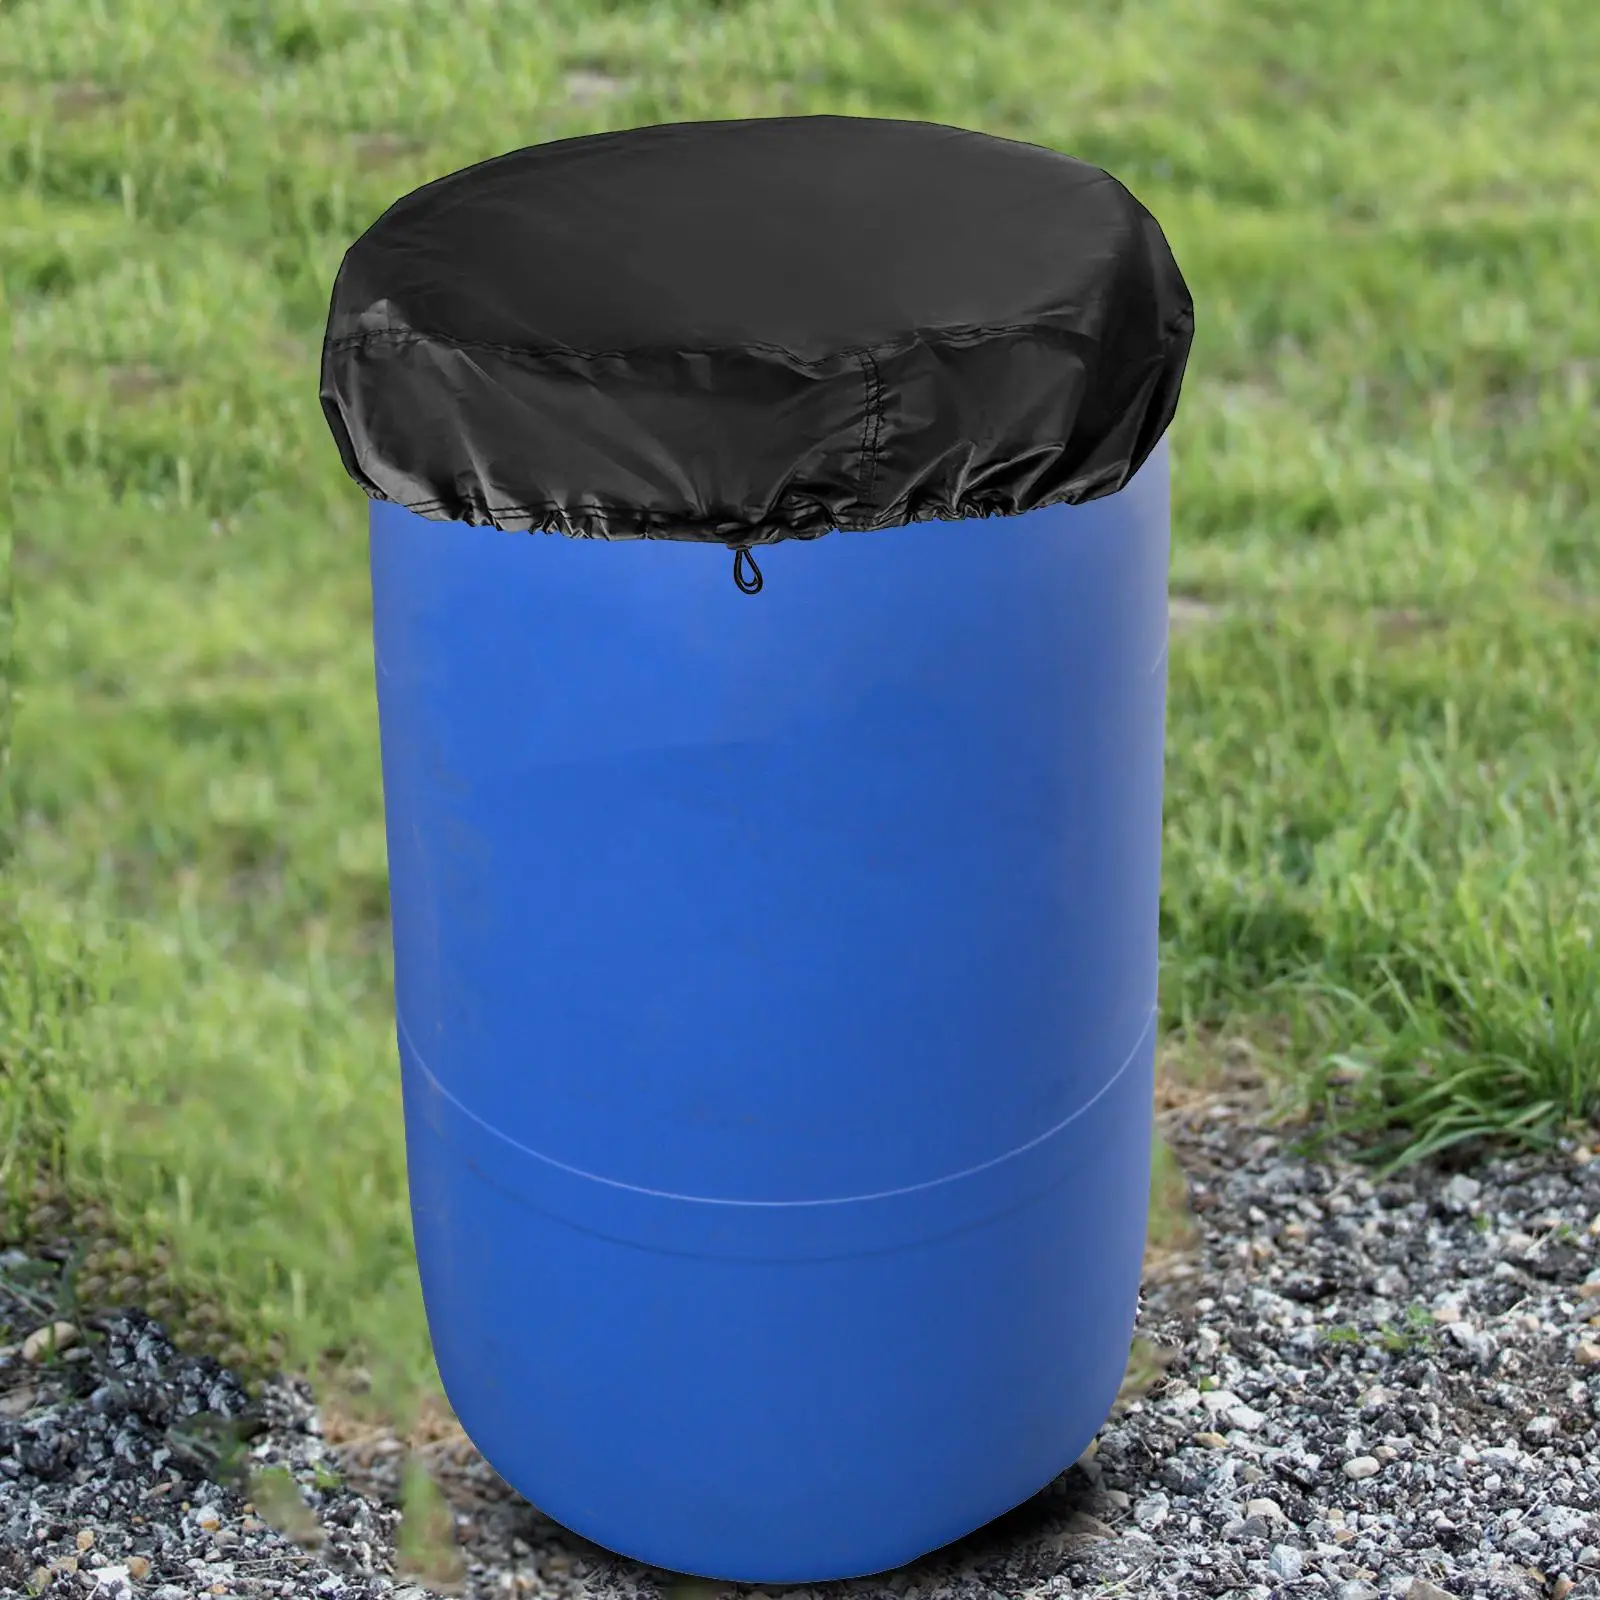 Rain Bucket Cover Gallon Drum Cover Protector 65cm Cover for Rain Barrels